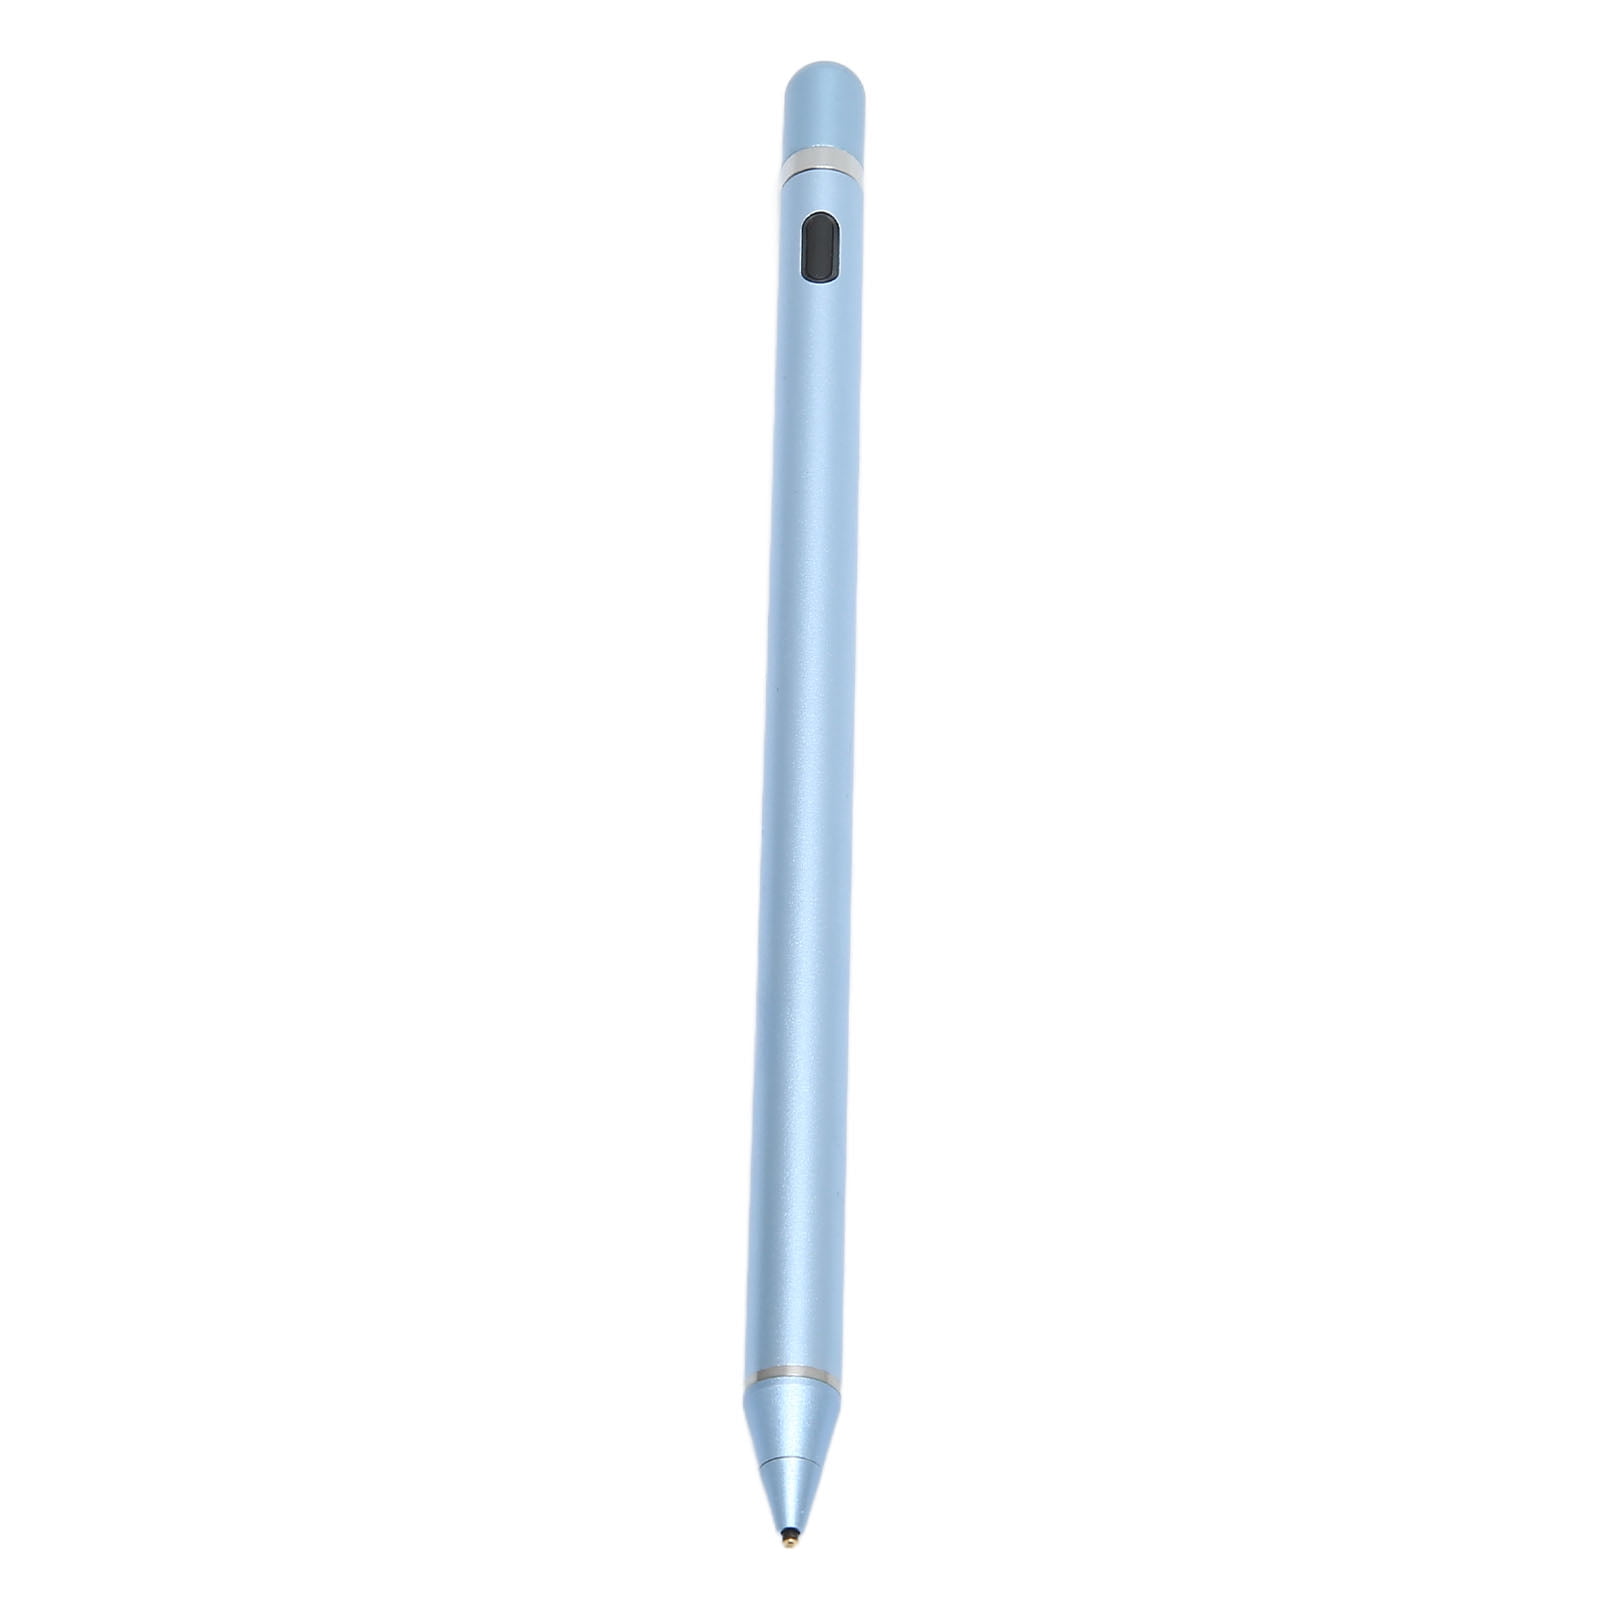 Stylus Touch Screen Pen,Stylus Pen Sensitivity Smoother Writing USB Charging Lightweight Surfaces Touch Screen Pens Tablet,Touch Pen - Walmart.com